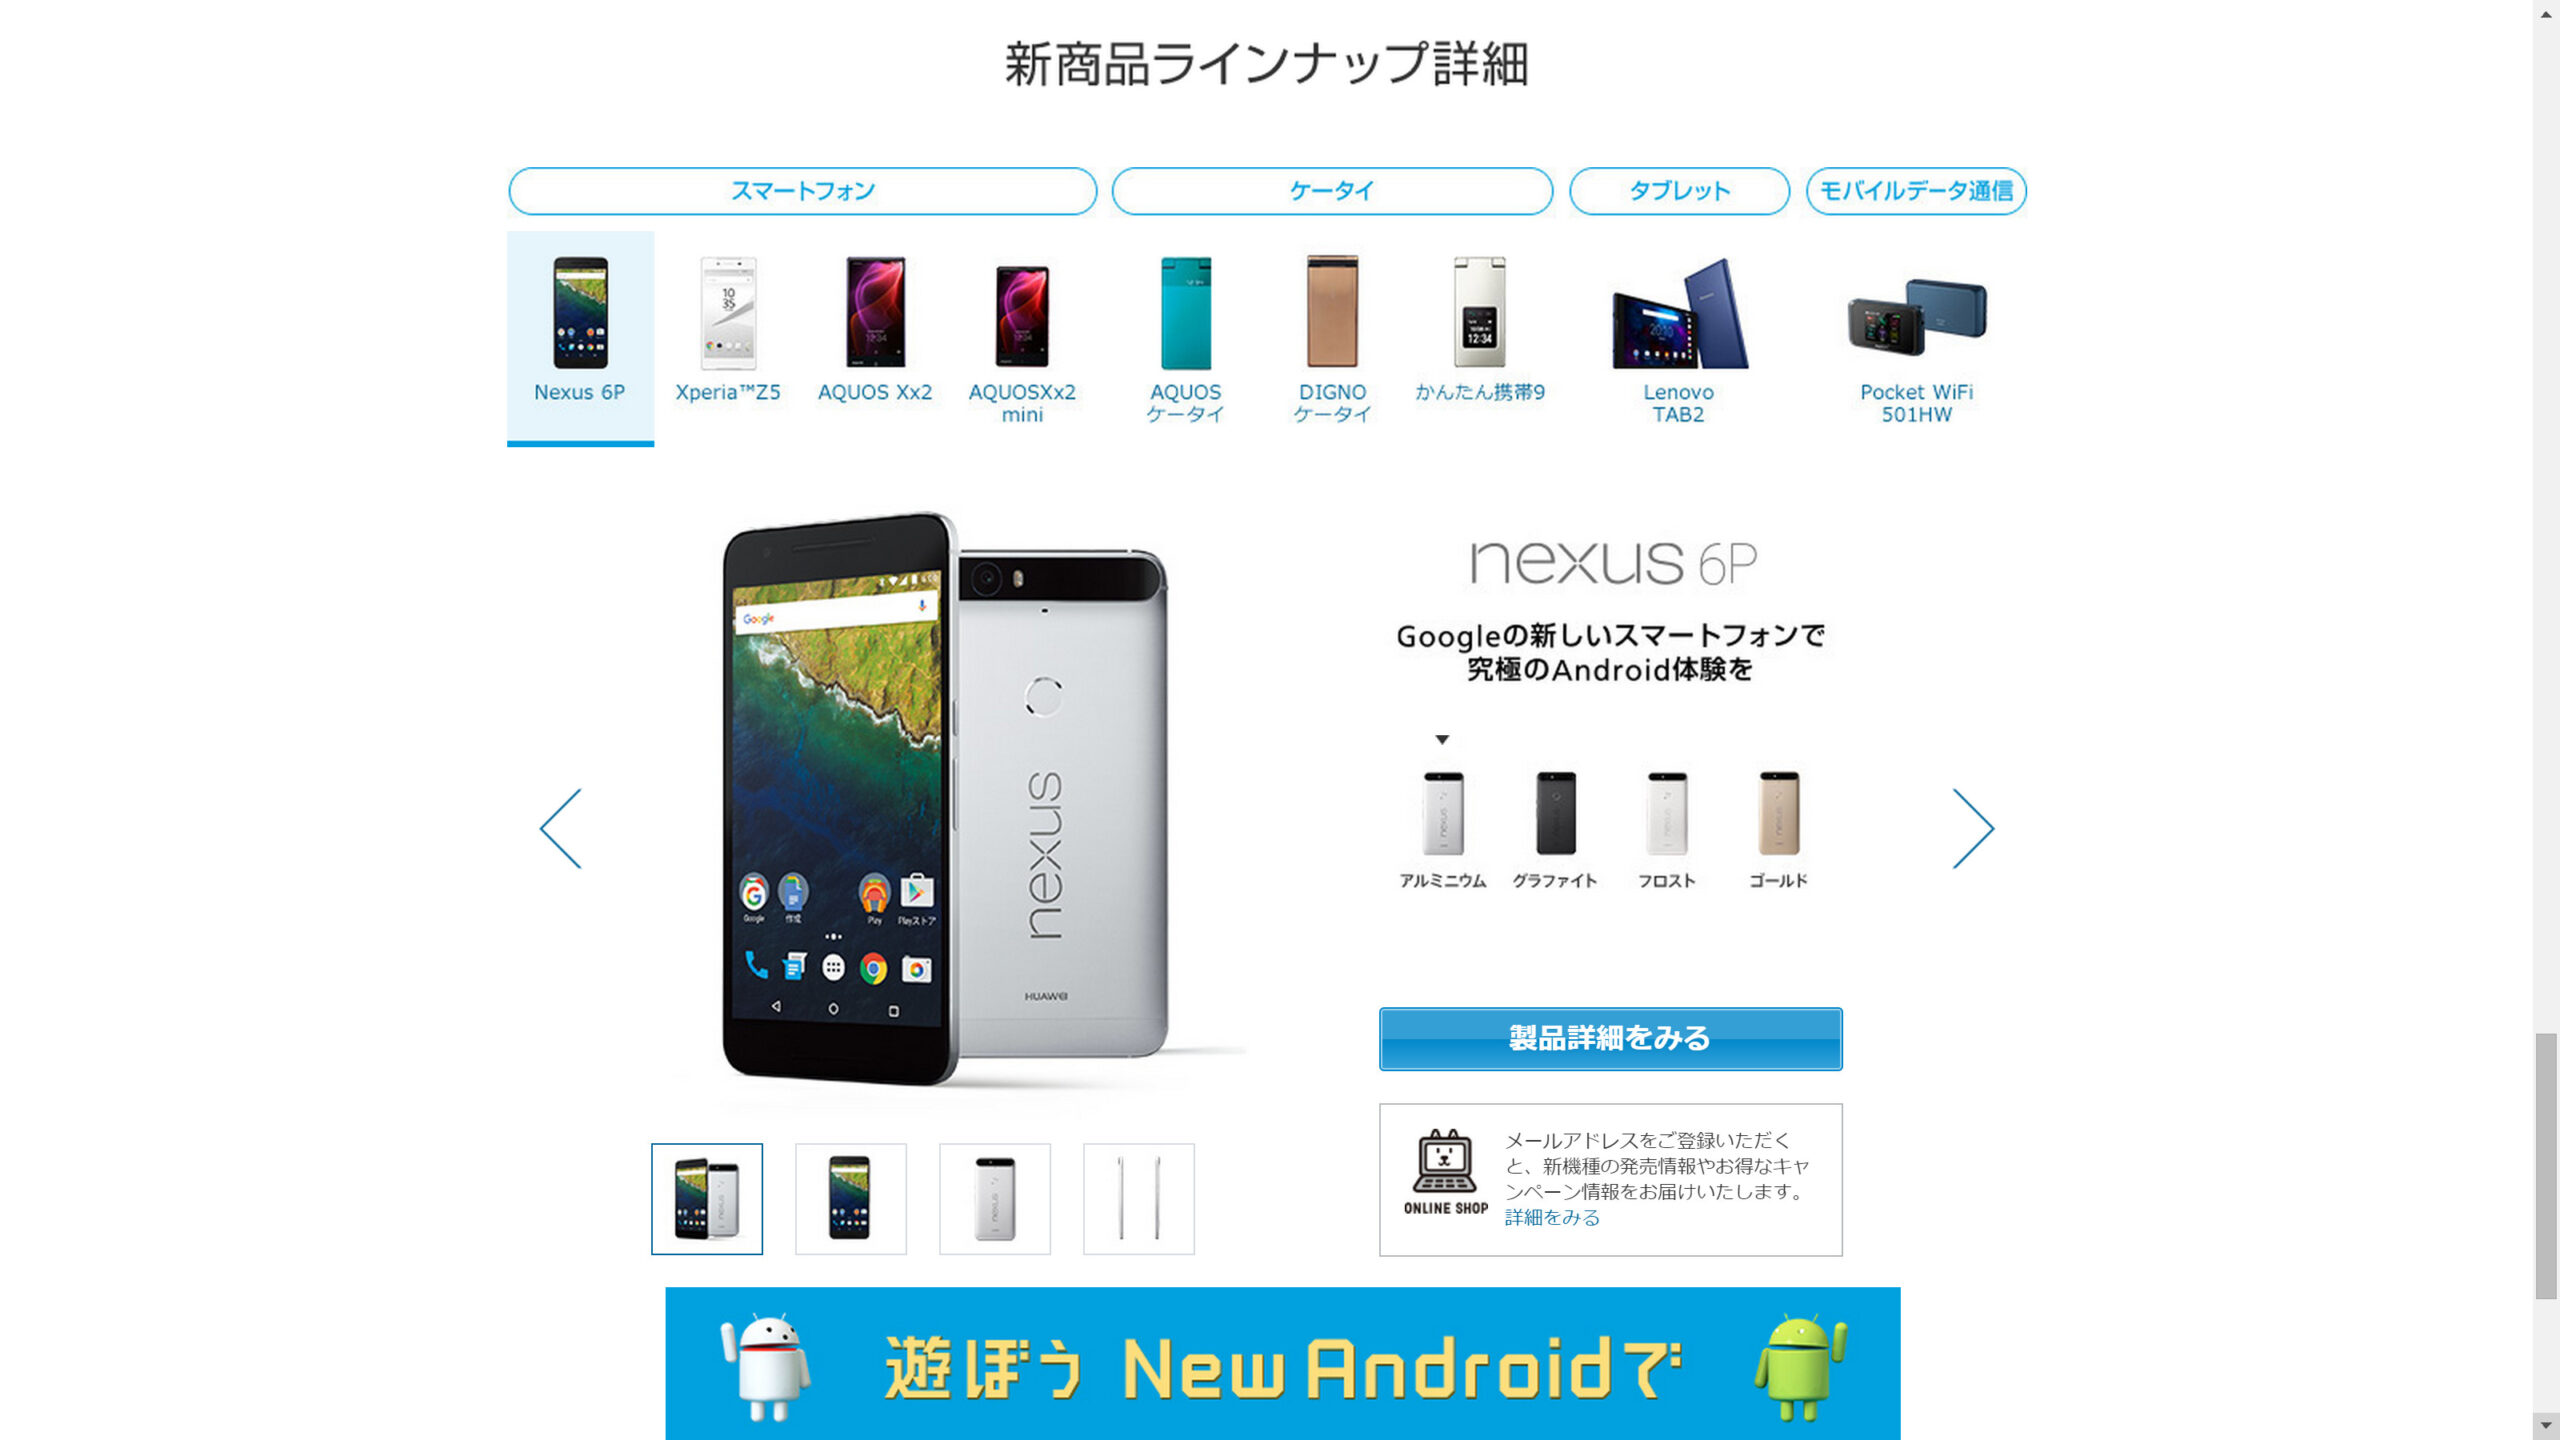 Softbank's Nexus 6P preview page.